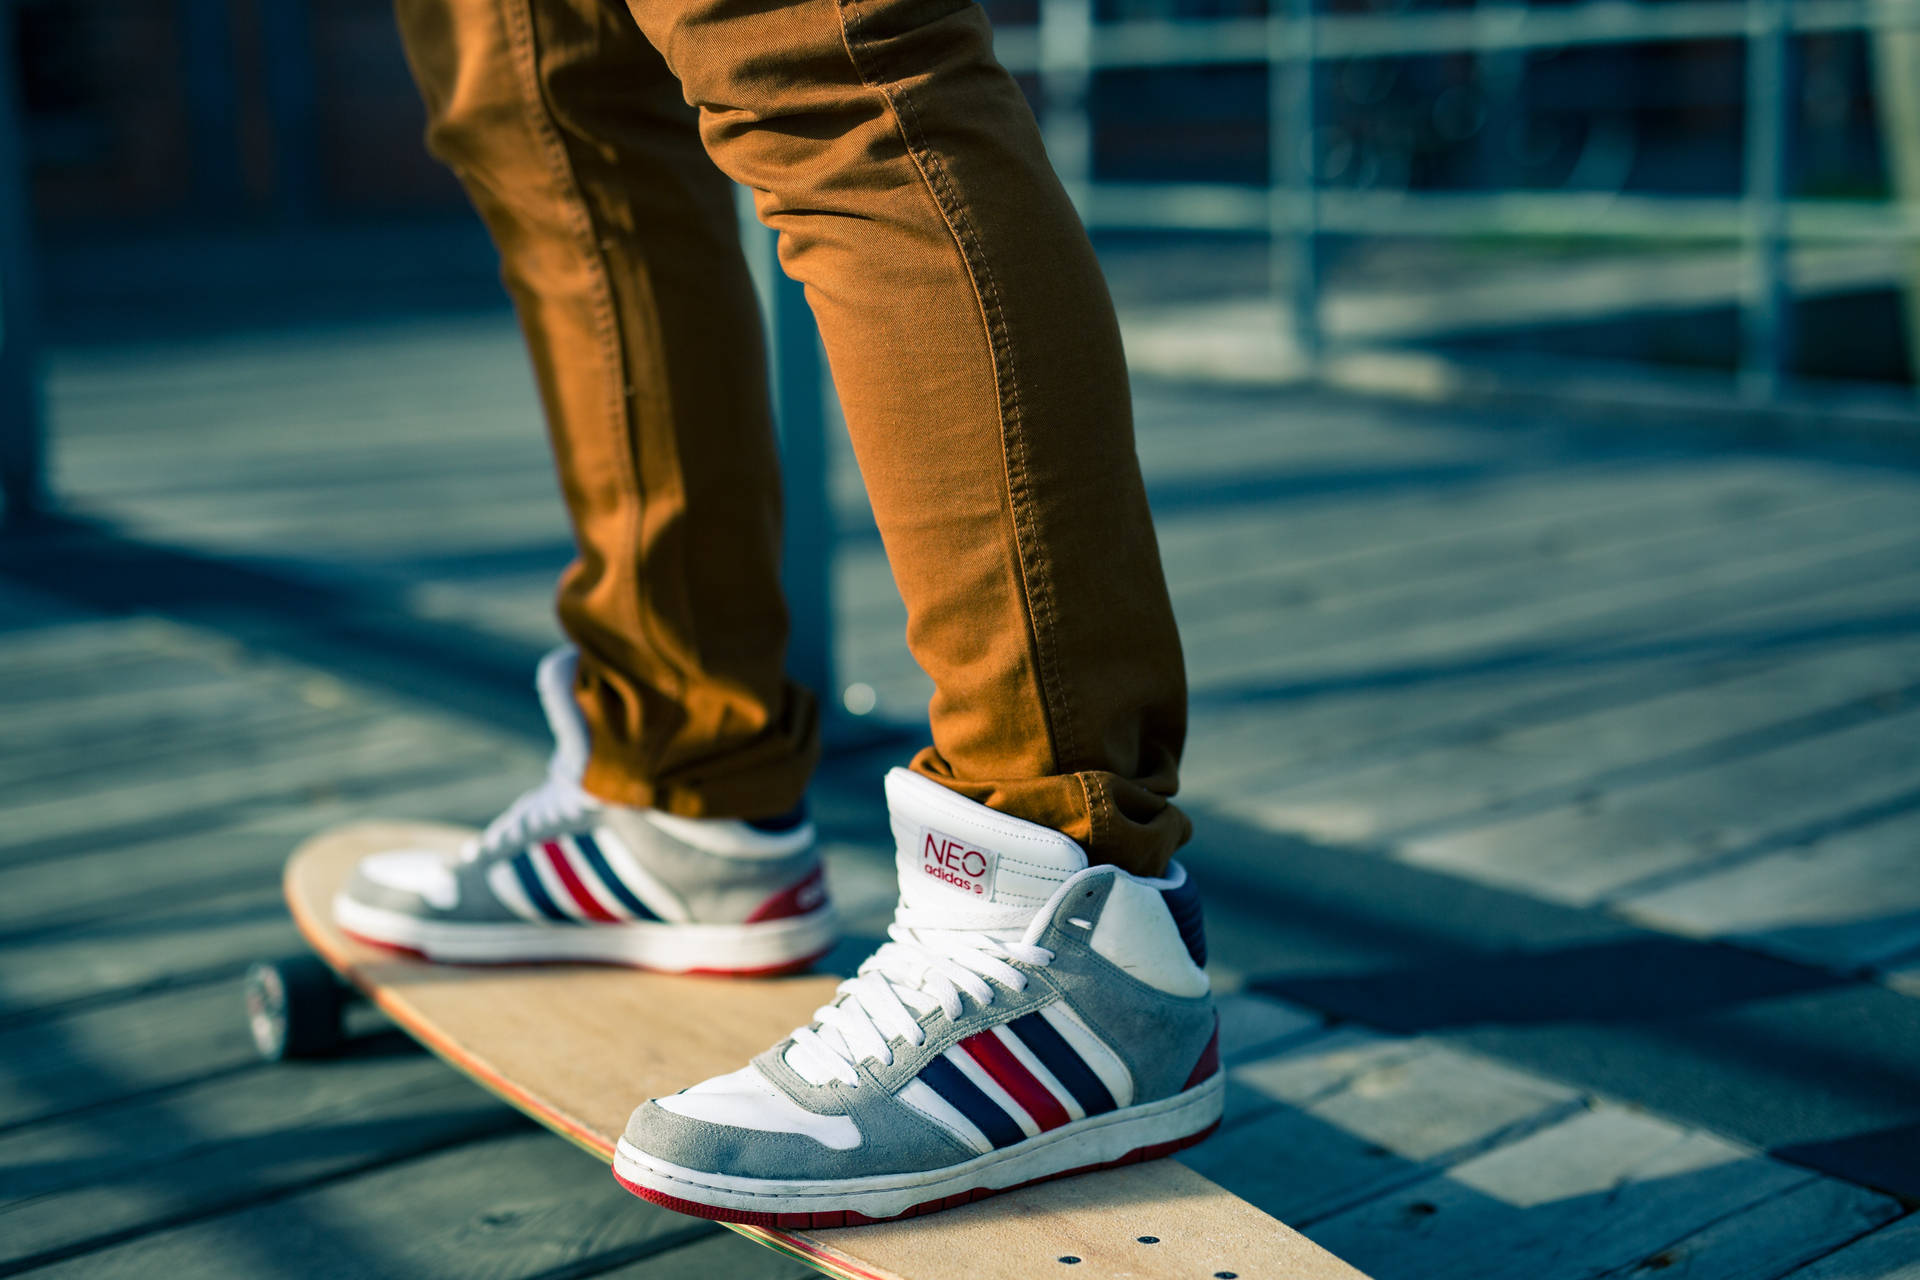 Adidas Neo Sneakers Skateboard Background